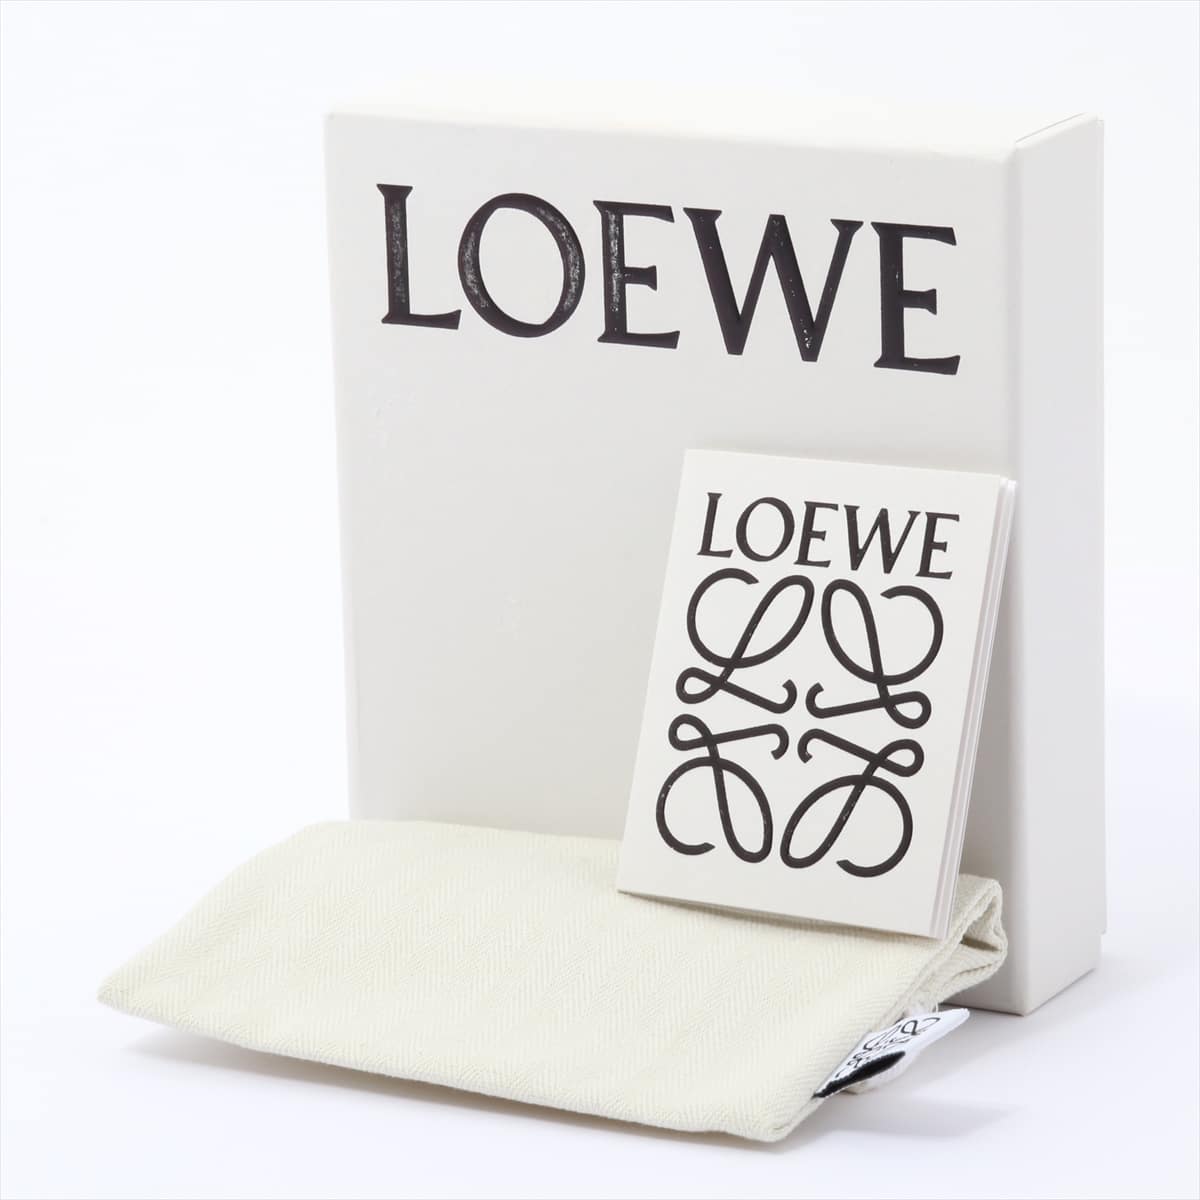 Loewe Charm Metallic material Silver box Comes with storage bag Anagram